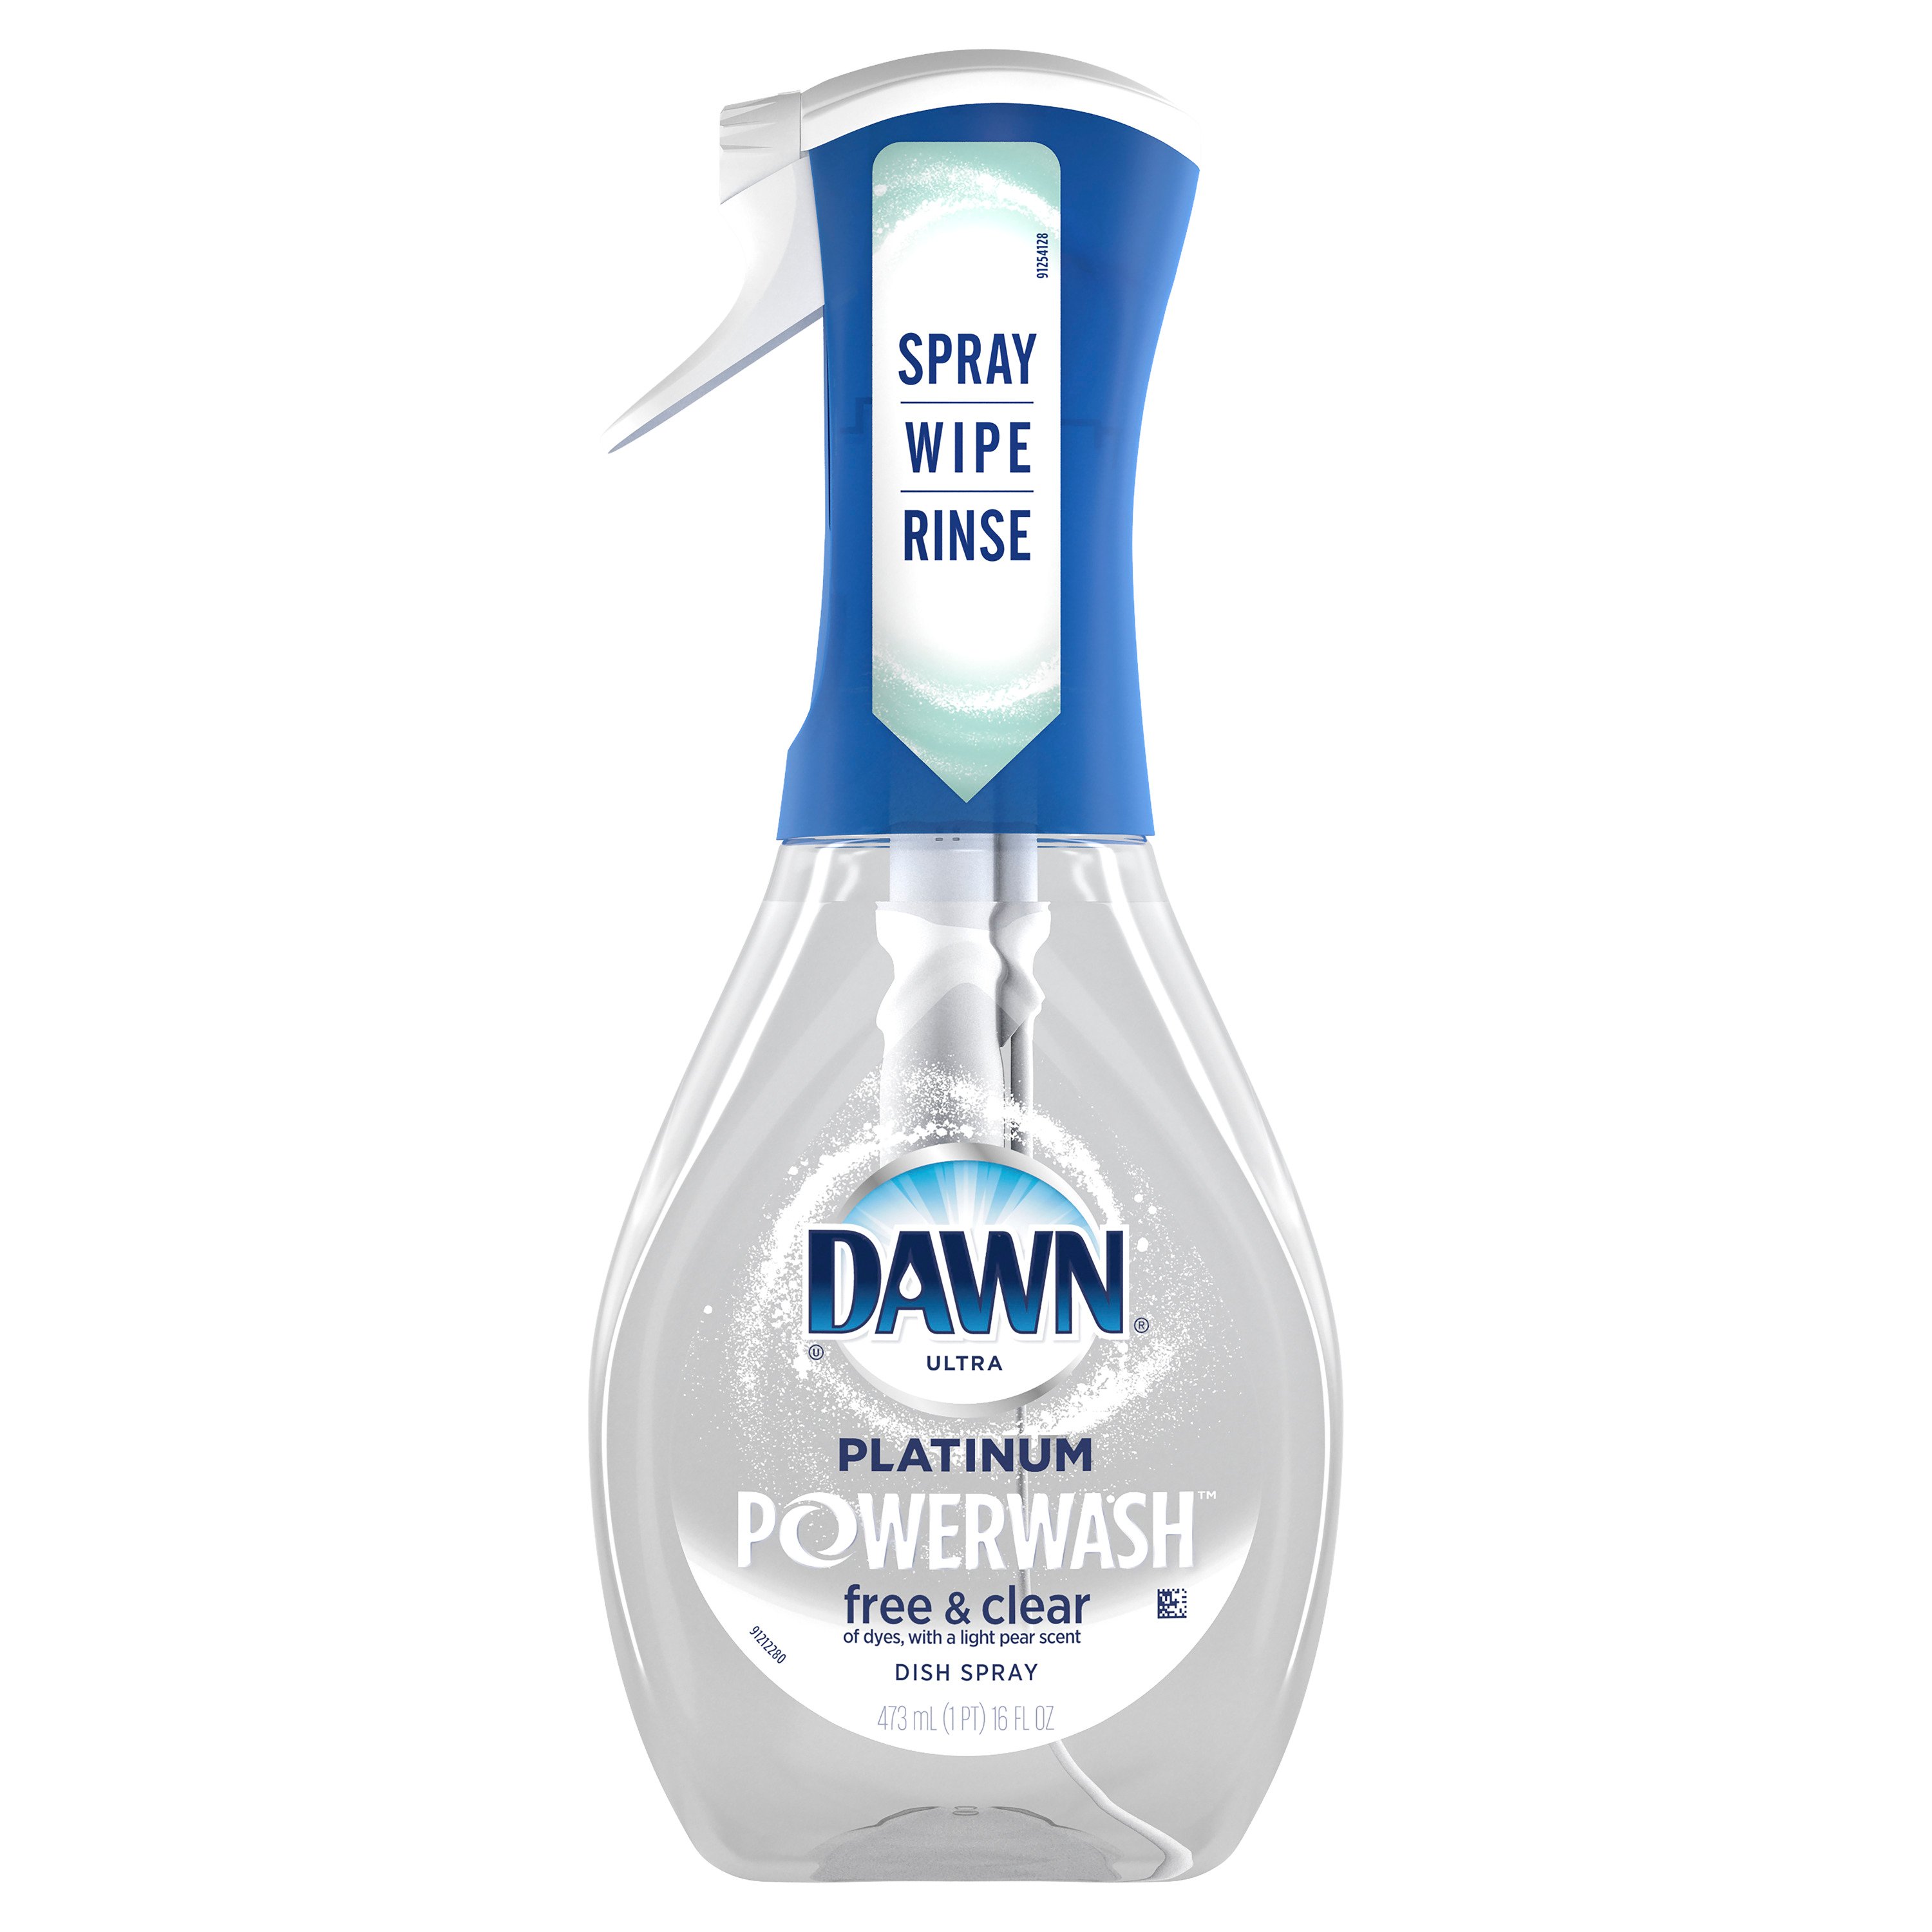 How To Make Dawn Platinum Powerwash Dish Spray Dawn Platinum Powerwash Free & Clear Dish Spray - Shop Cleaners at H-E-B